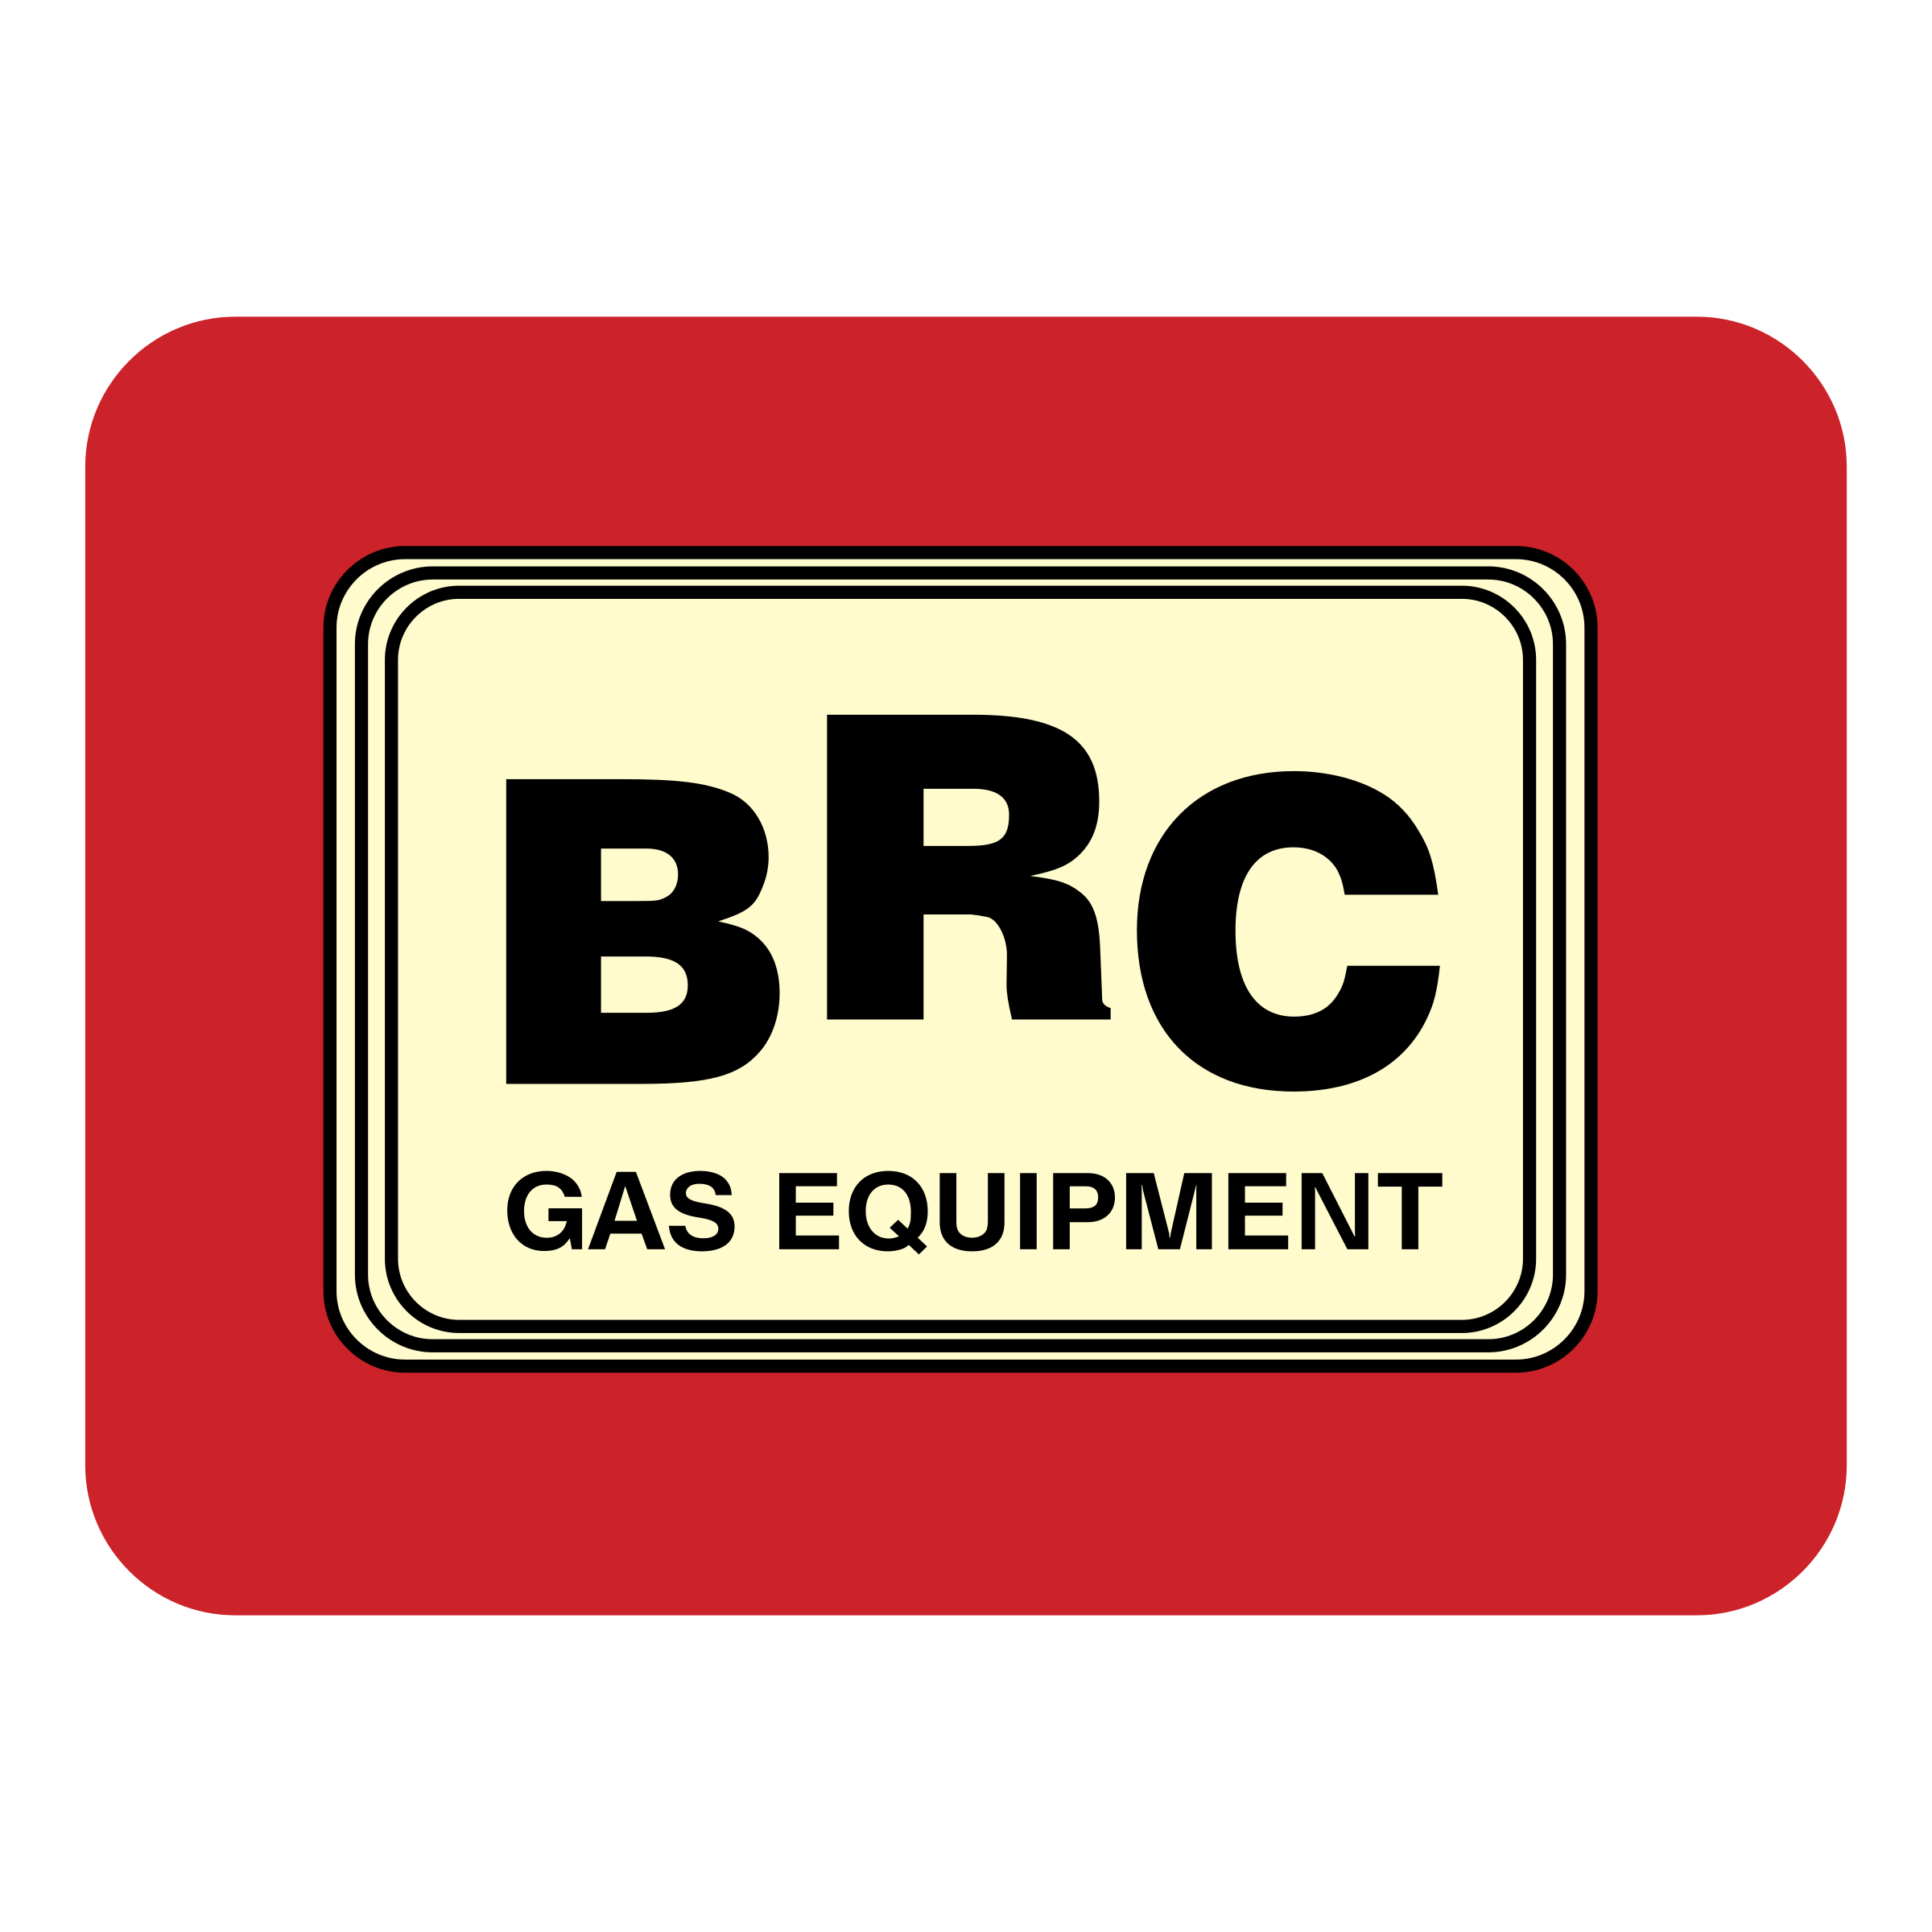 BRC Logo - BRC Logo PNG Transparent & SVG Vector - Freebie Supply